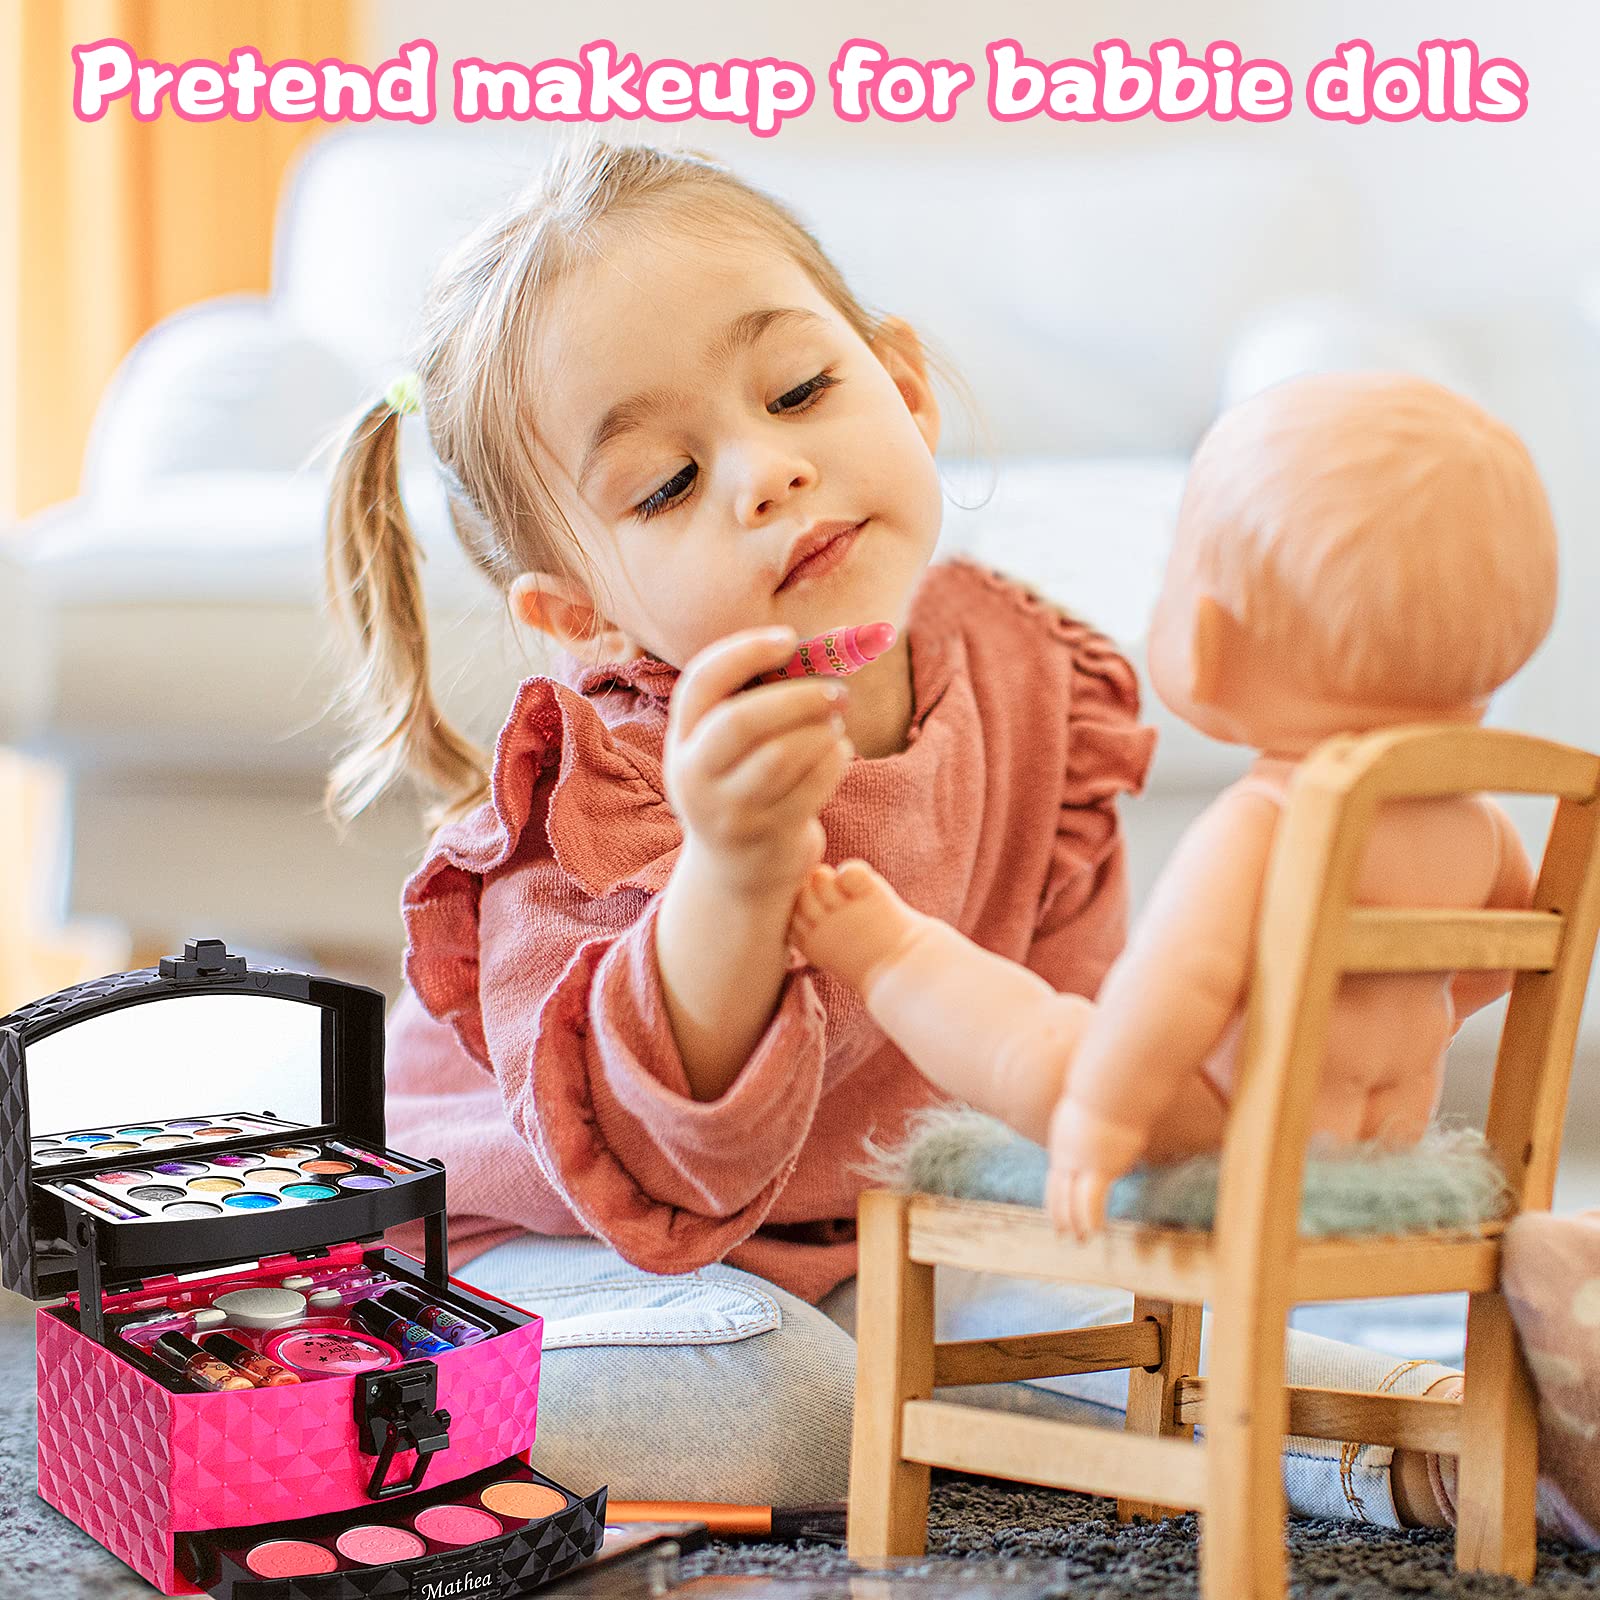 Mathea Real Makeup Girl Toys, Washable, Kids Makeup Kit for Girls, Makeup Set Cosmetic Beauty Set for Kids, Makeup Toy for Girls, Gift for Kids